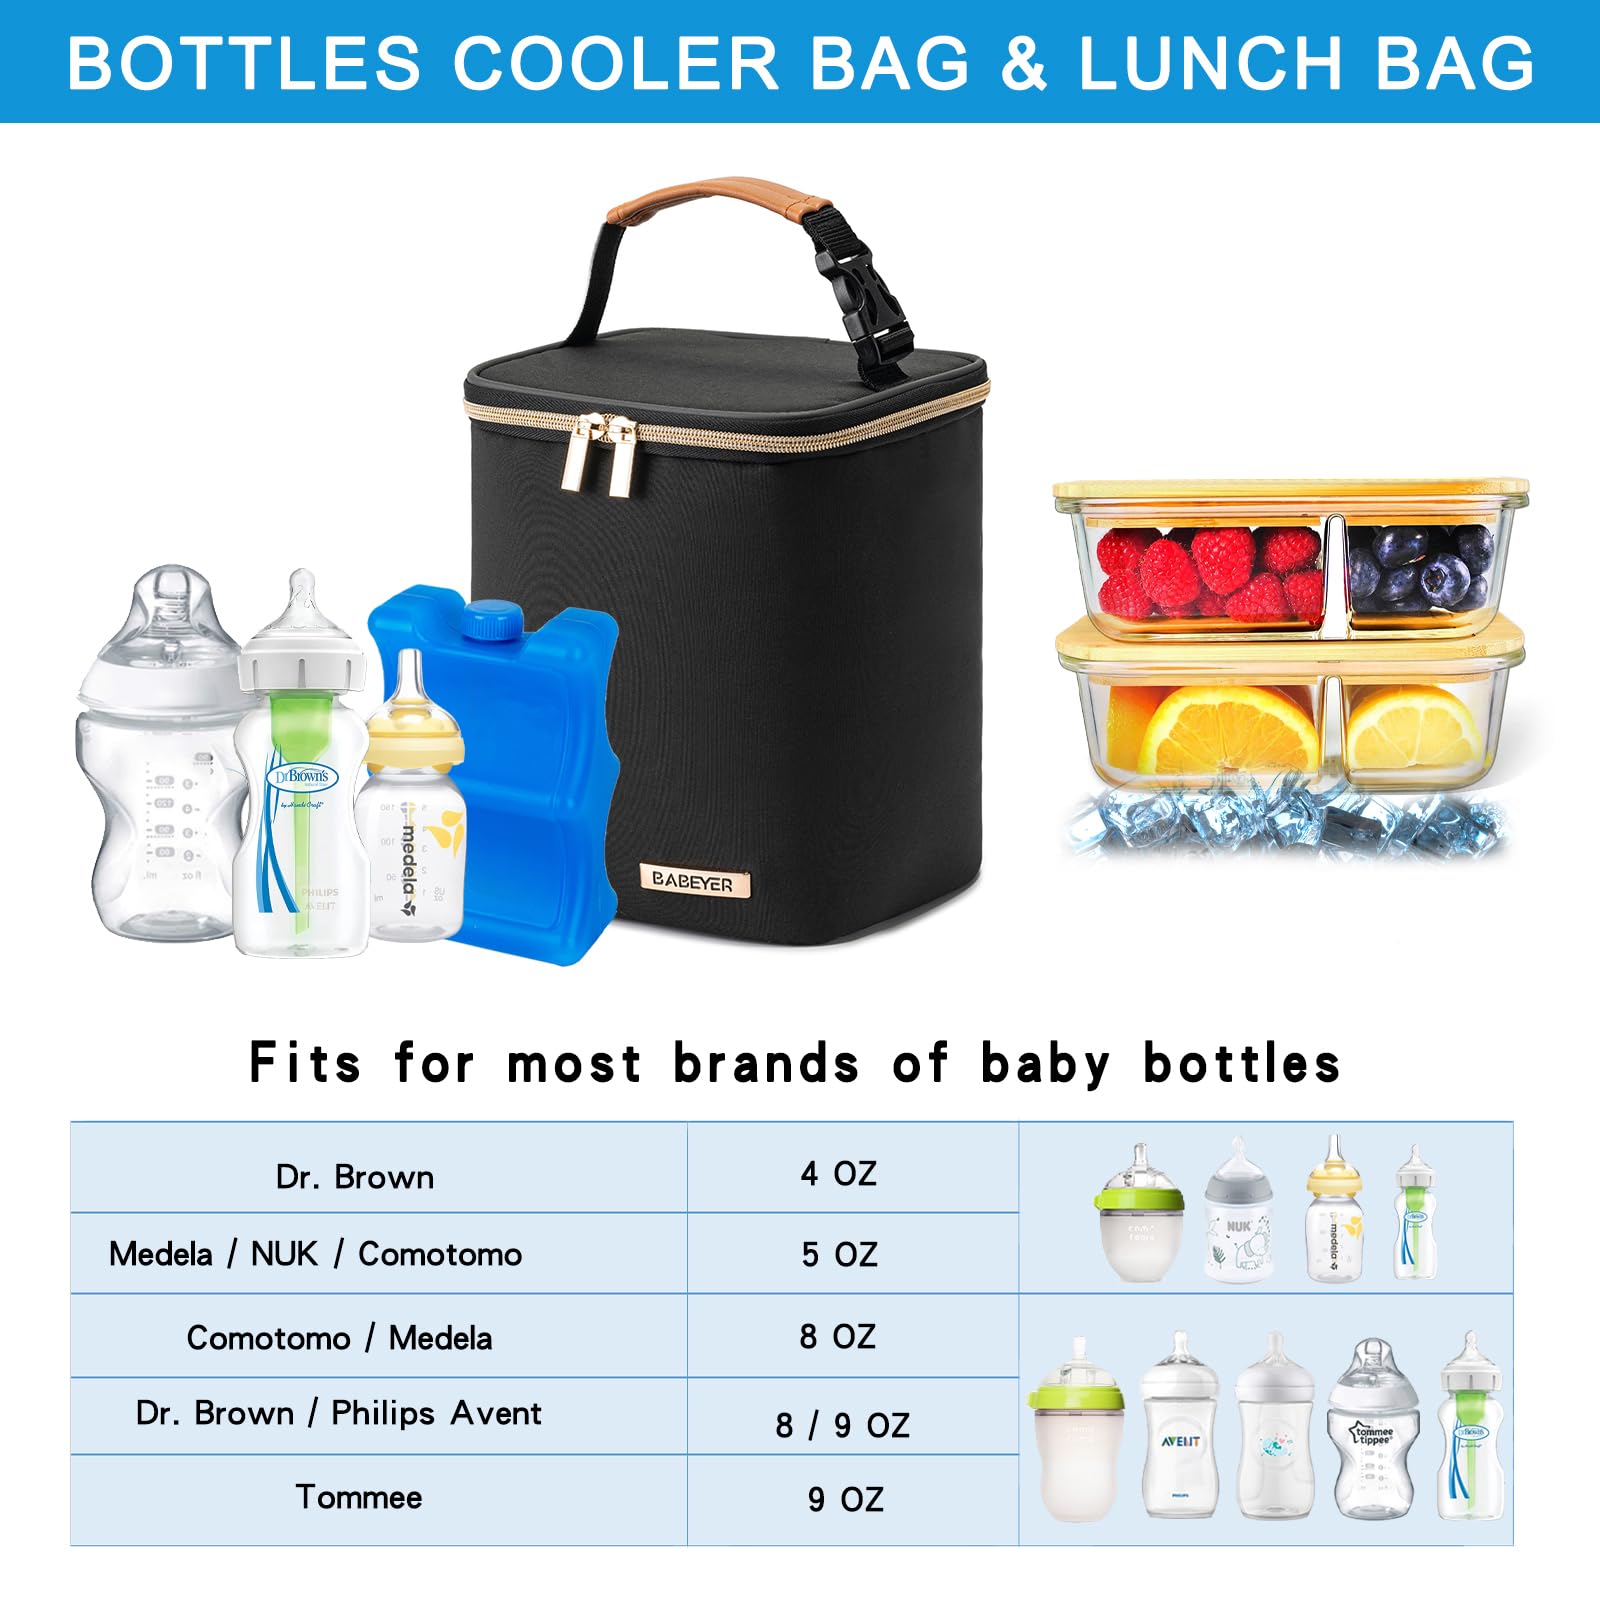 BABEYER Breastmilk Cooler Bag with Ice Pack Fits 4 Baby Bottles Up to 9 Ounce, Baby Bottle Cooler Bag Suitable for Nursing Mom Daycare, Black